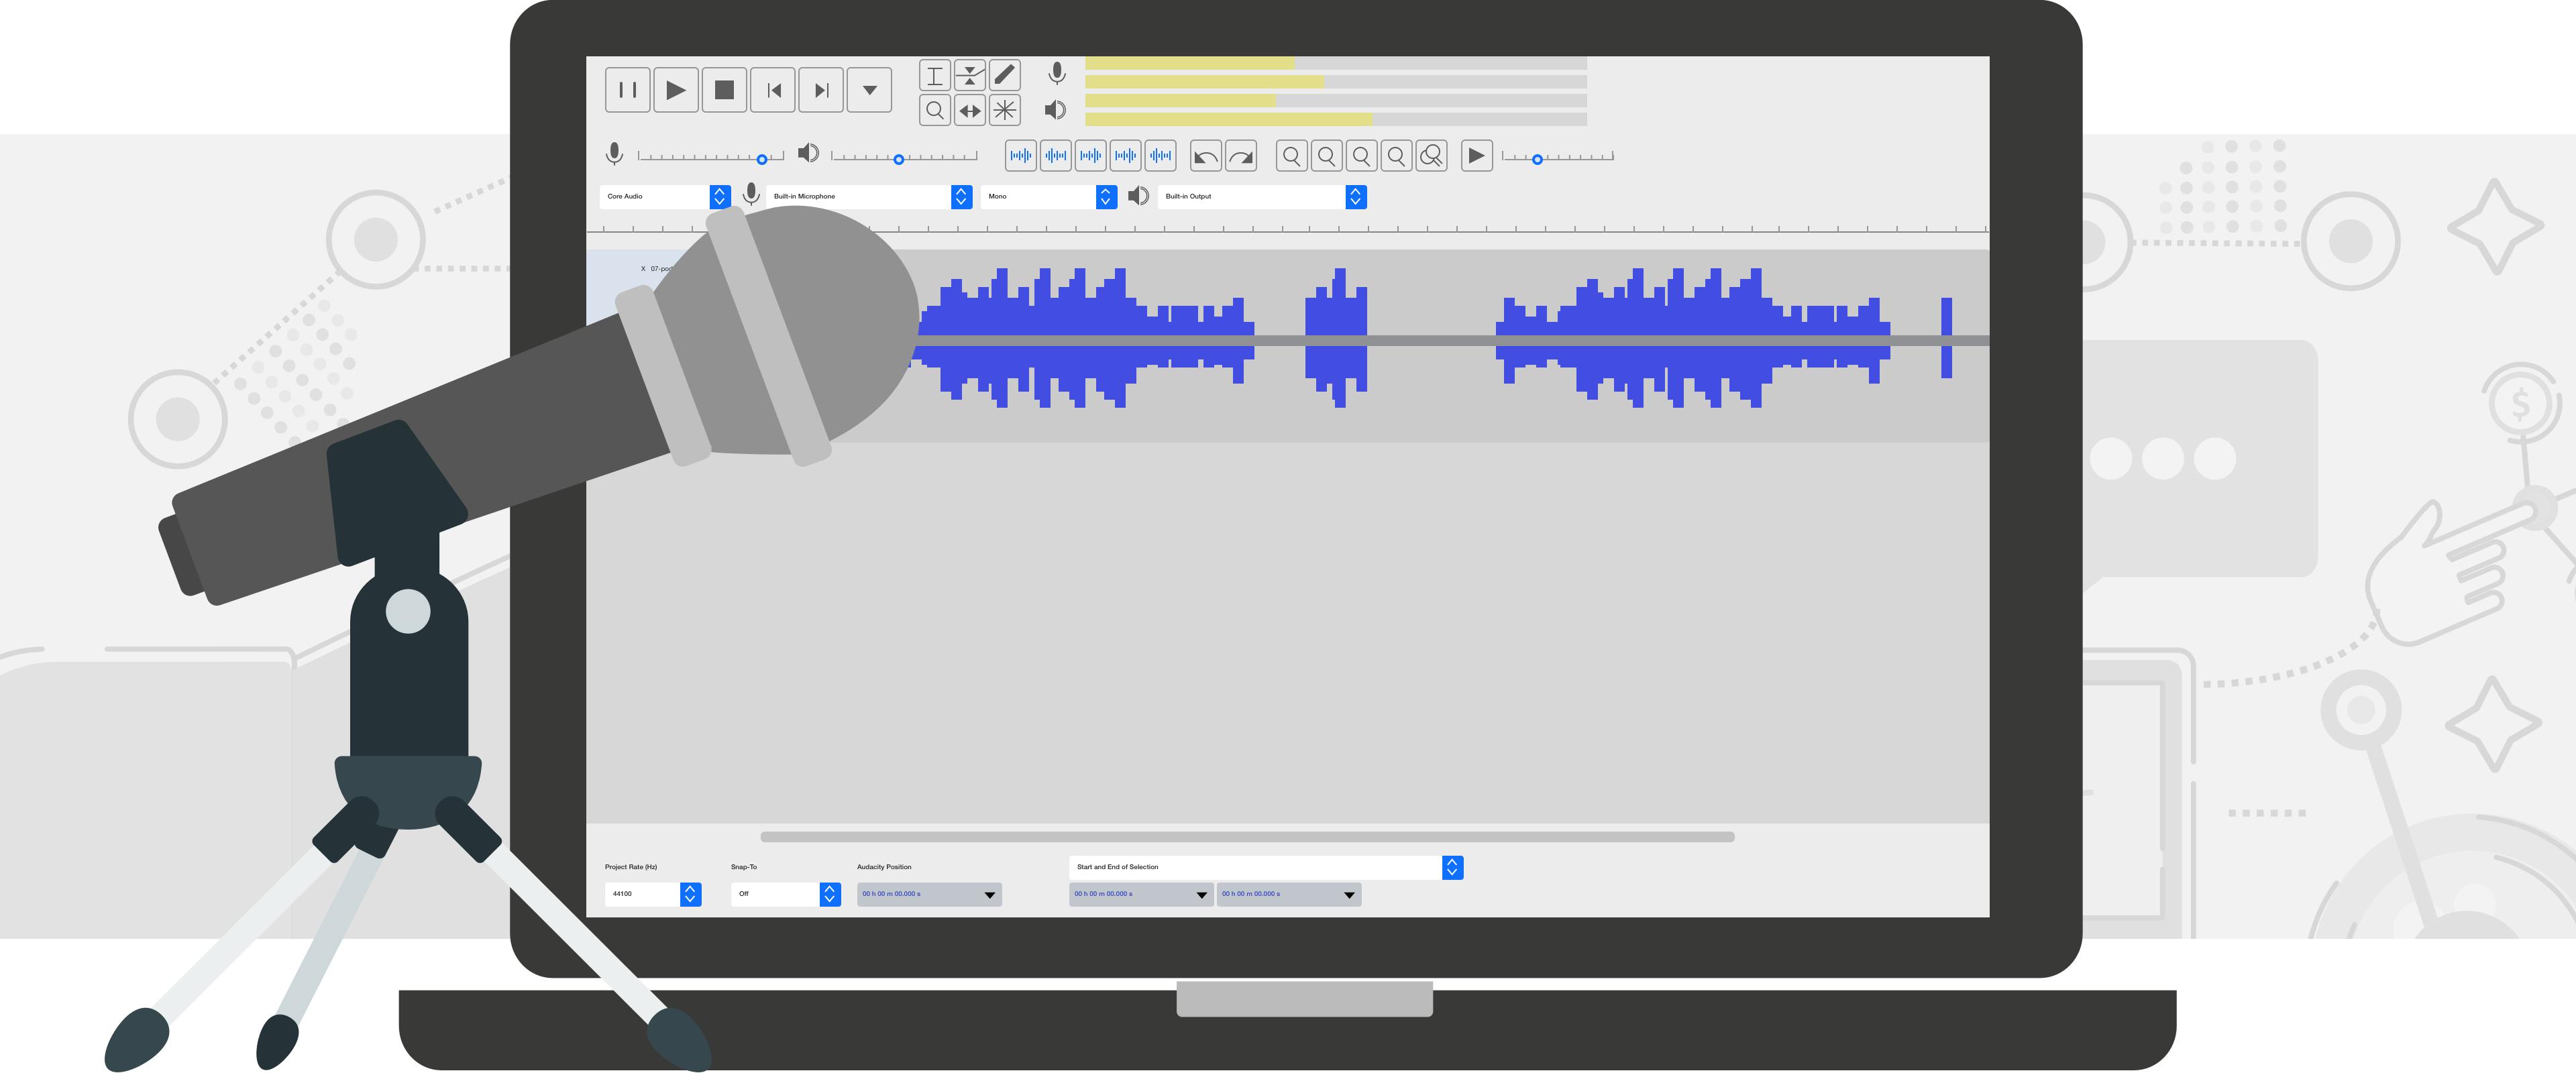 Samson Q2U Microphone: Versatile, High-Quality Option for Podcasting —  Eightify